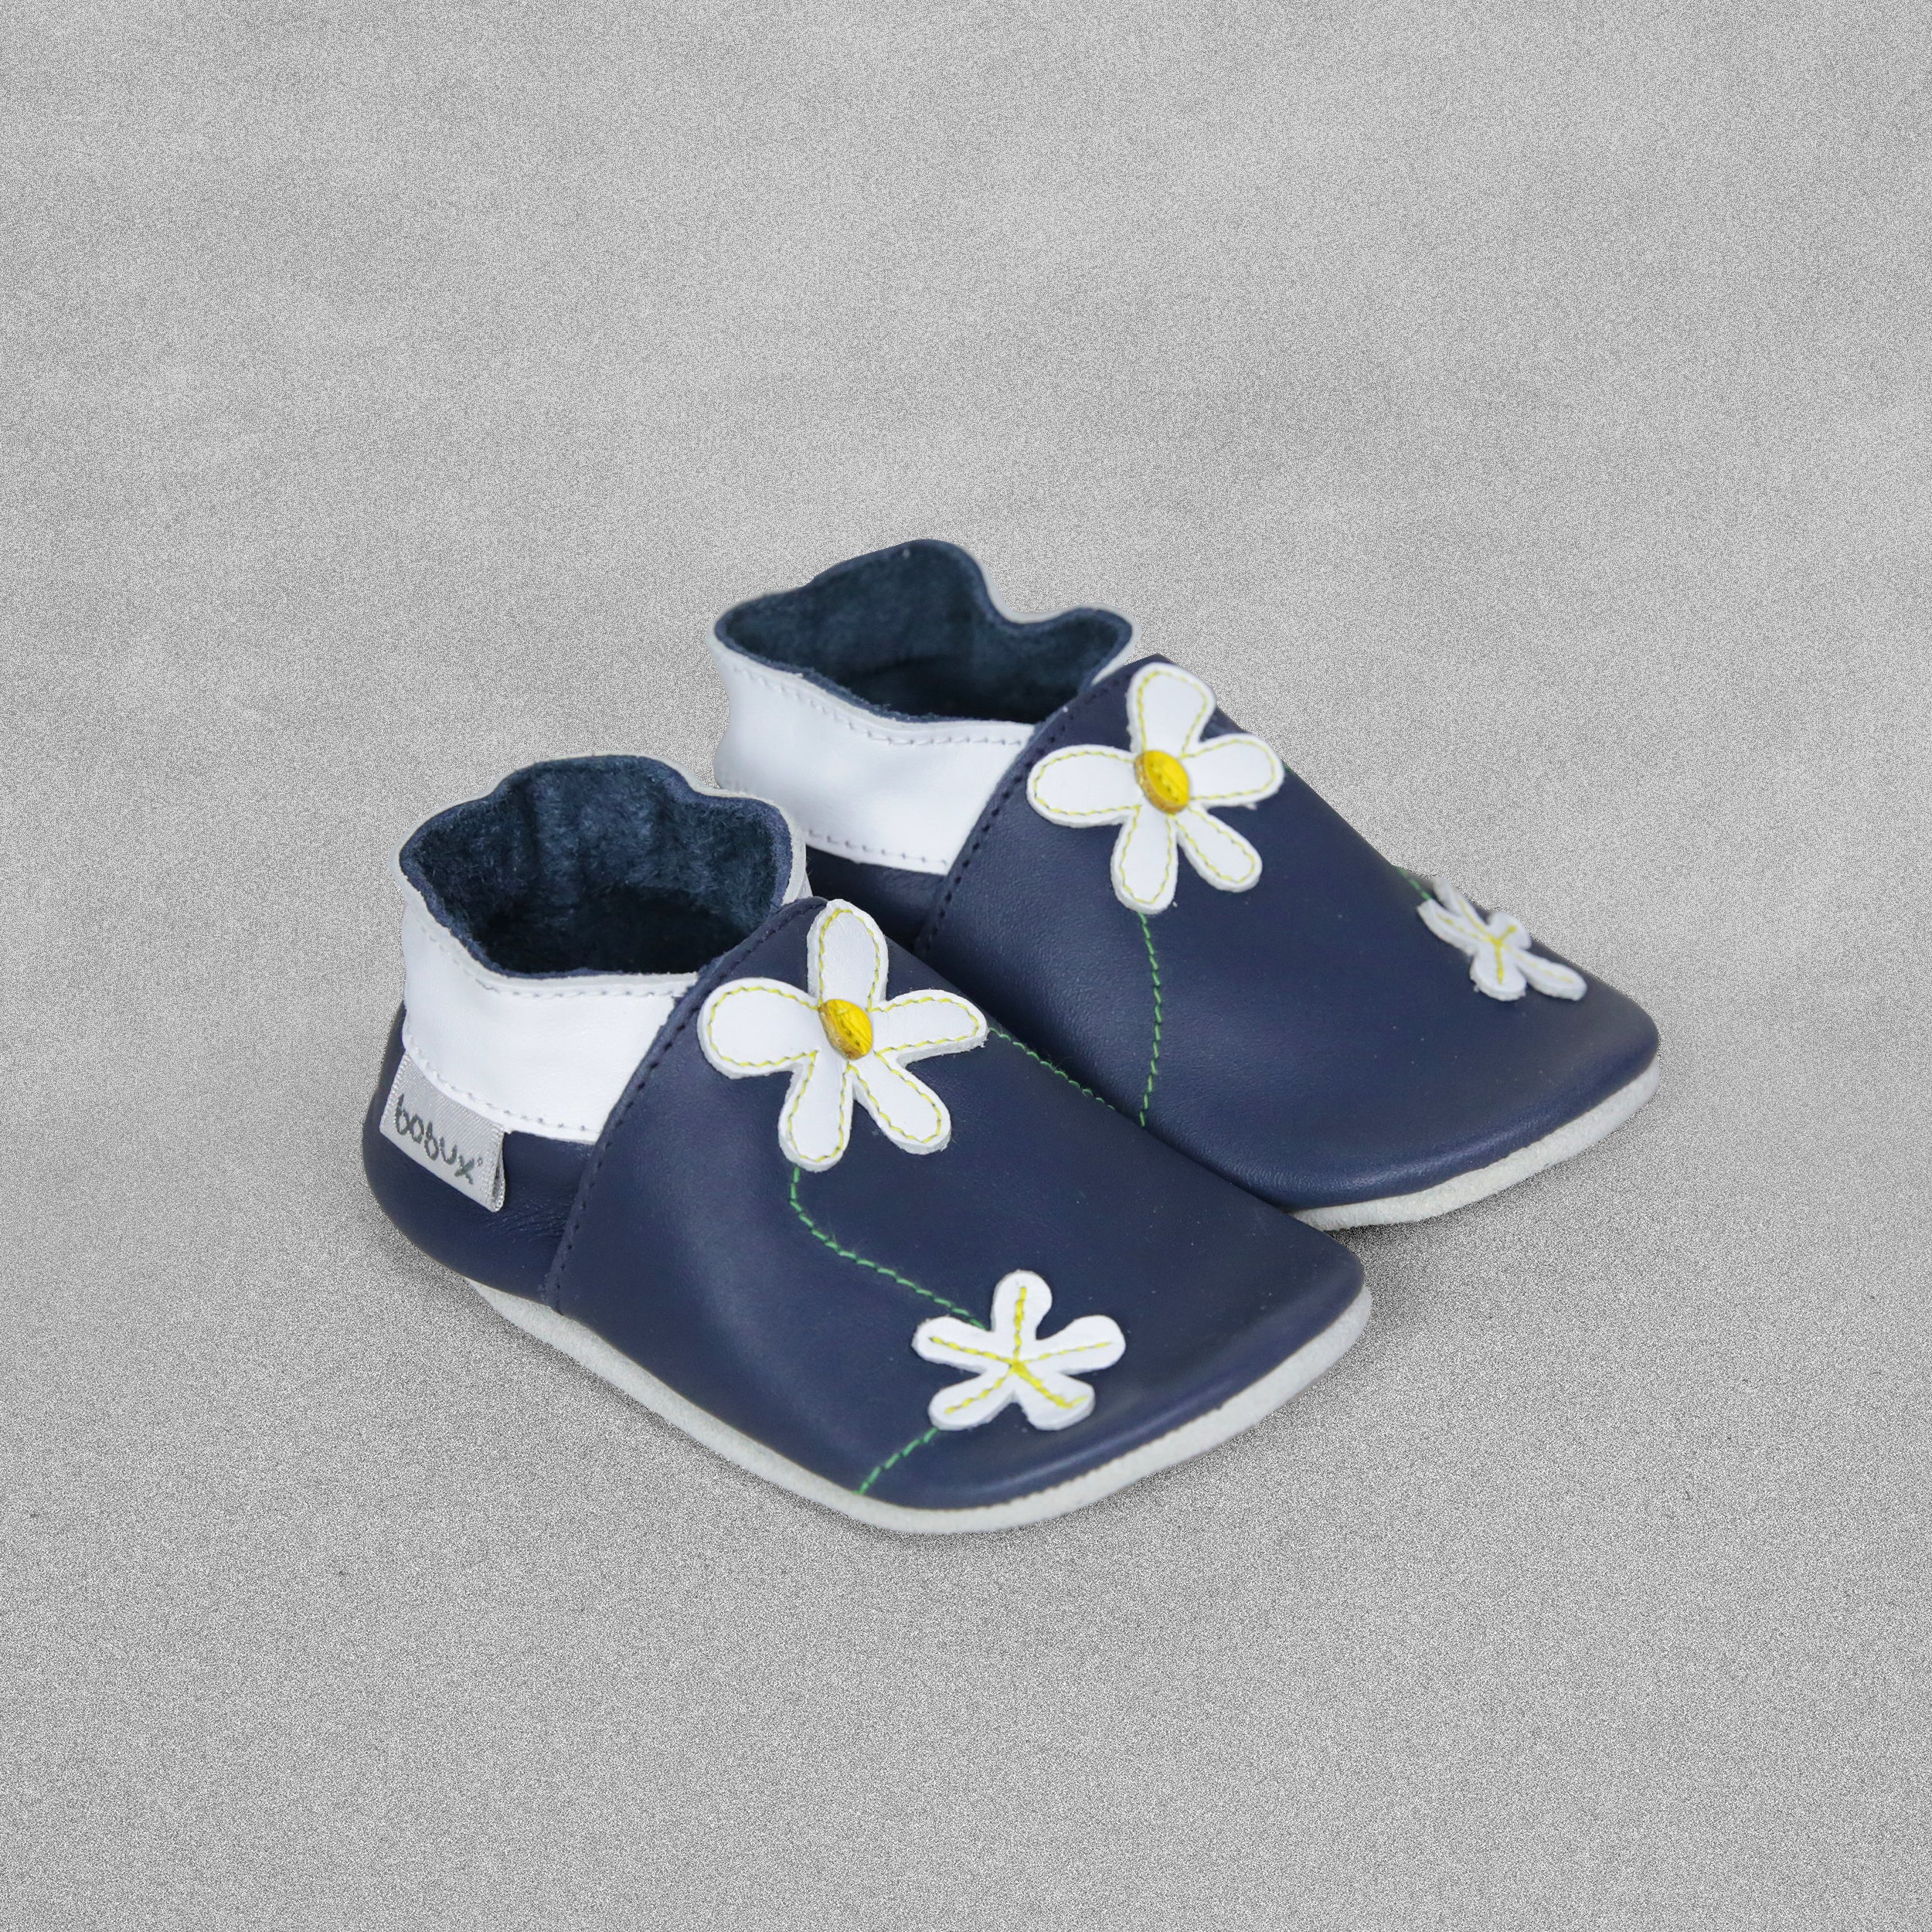 Bobux Soft Sole Baby Shoe 'Blue Daisy' - Medium /9-15 Months